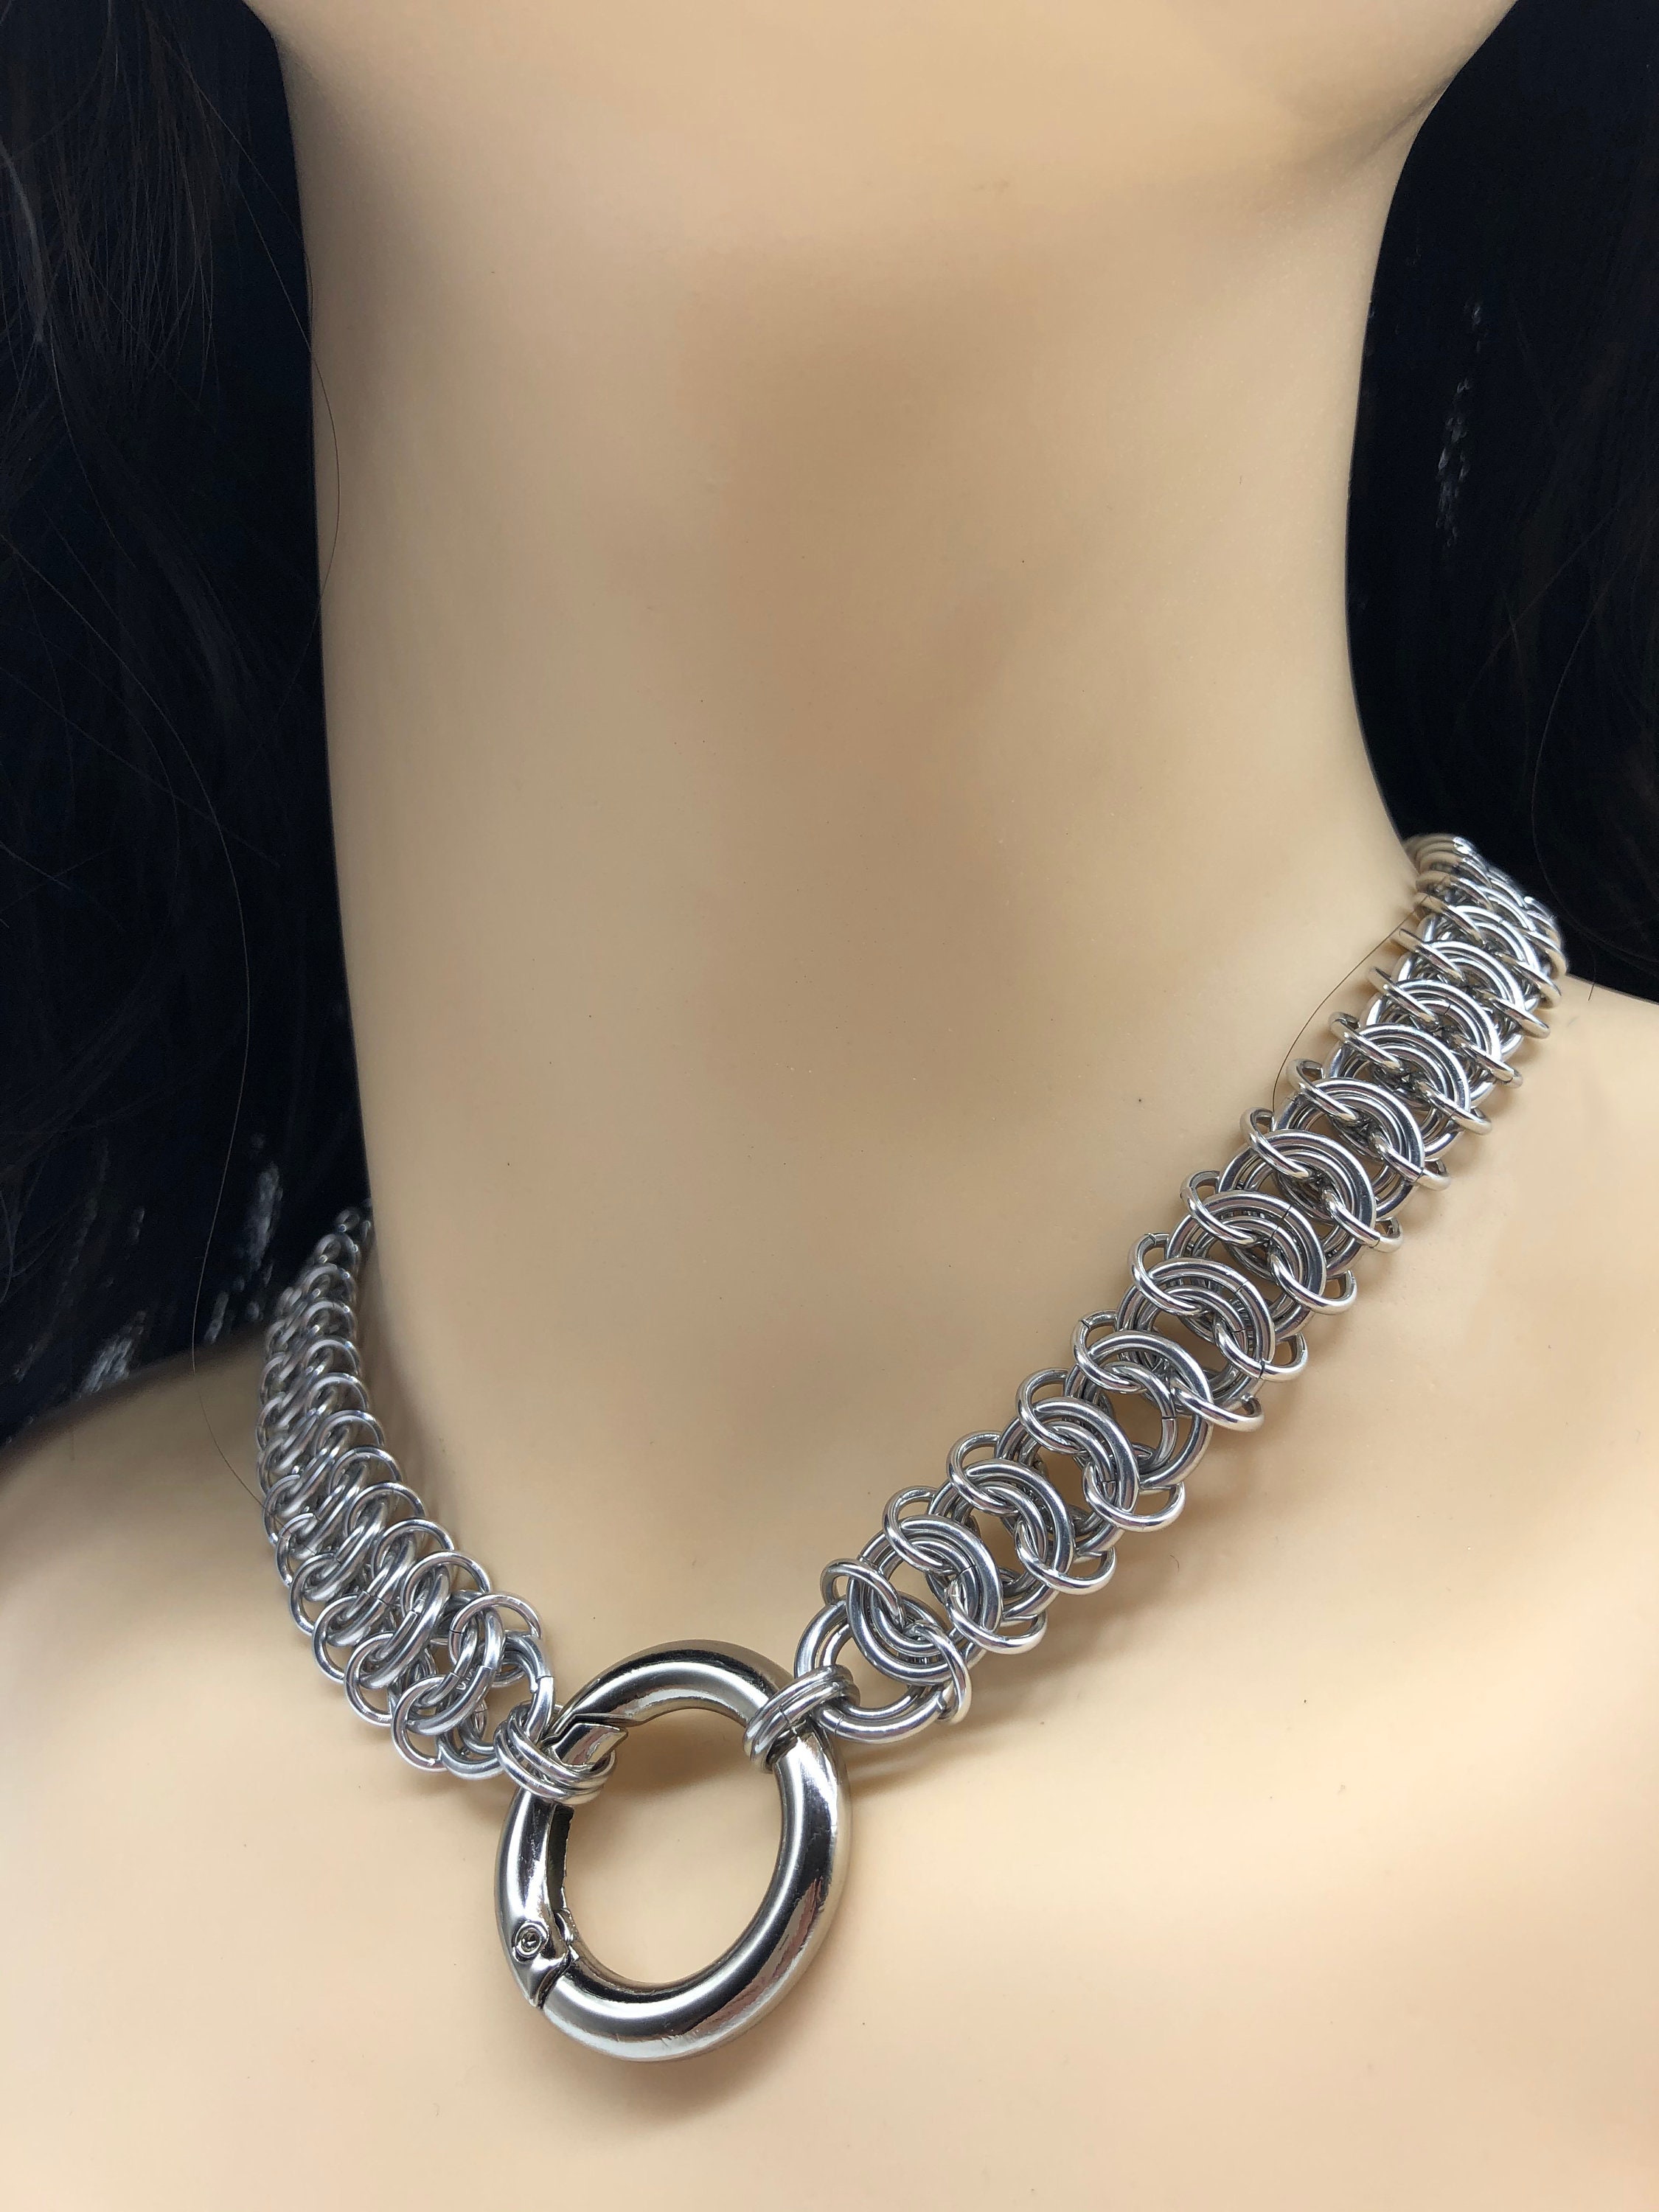 Vertebrae BDSM Gorean Slave Collar Choker Necklace | Etsy UK